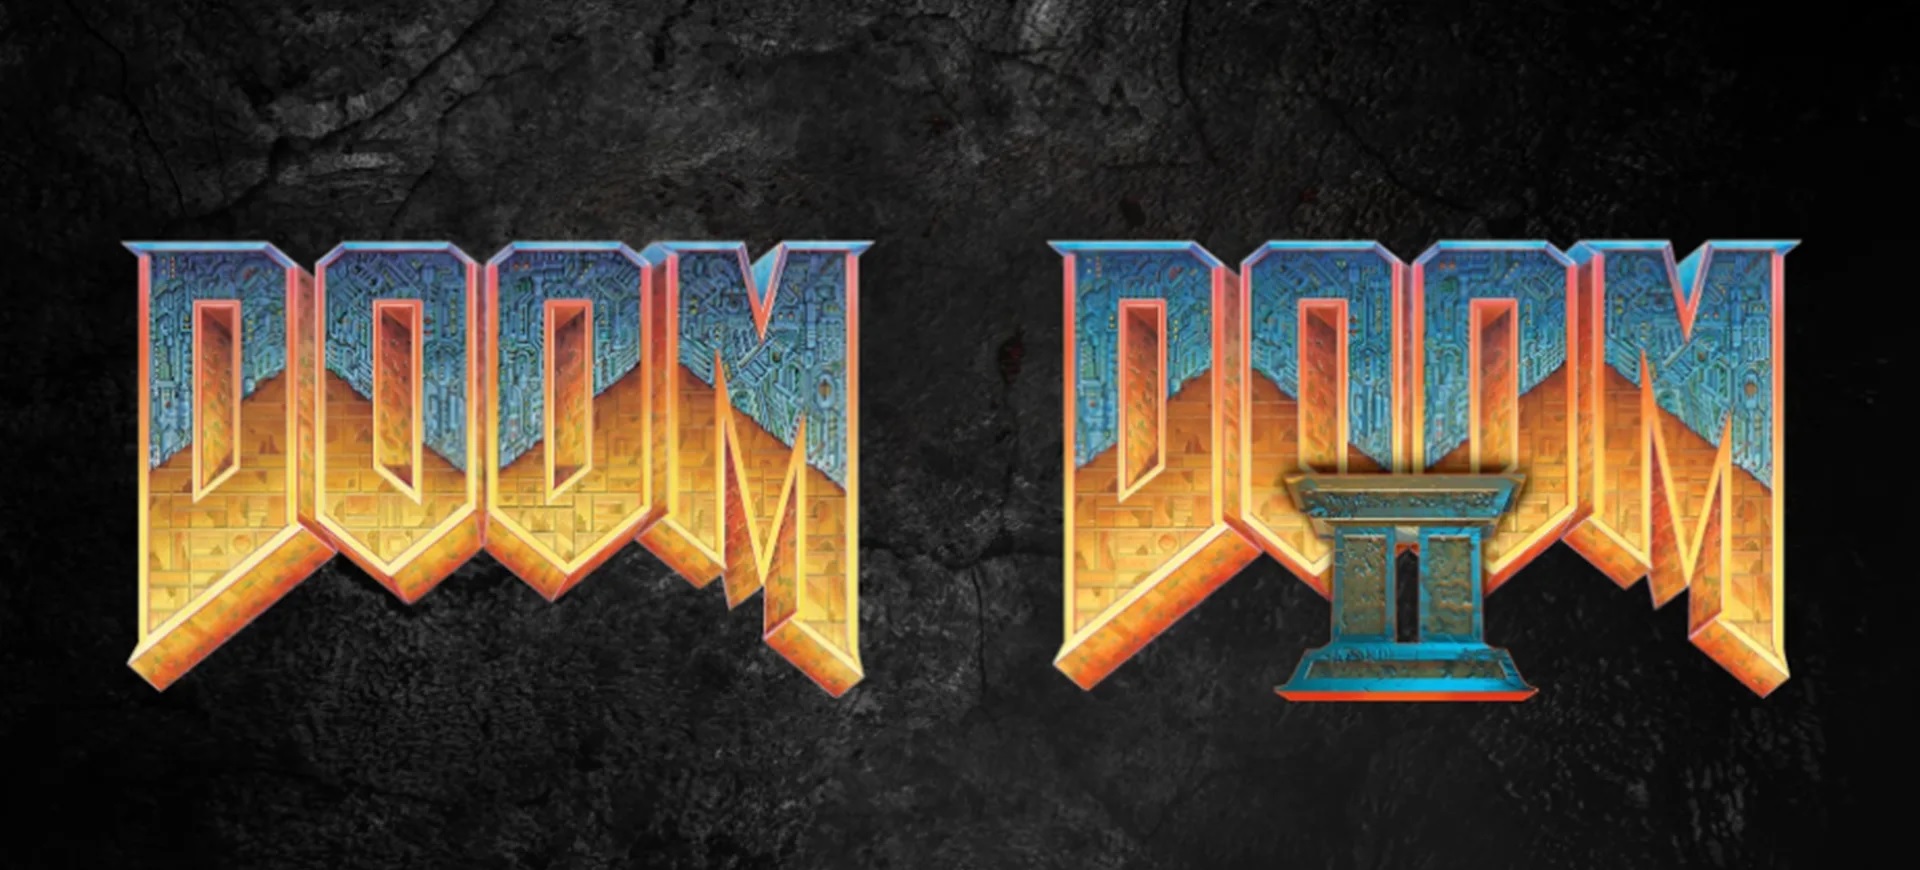 FNAF2 Doom Remake v1.2.0 released. Patch notes listed in attached